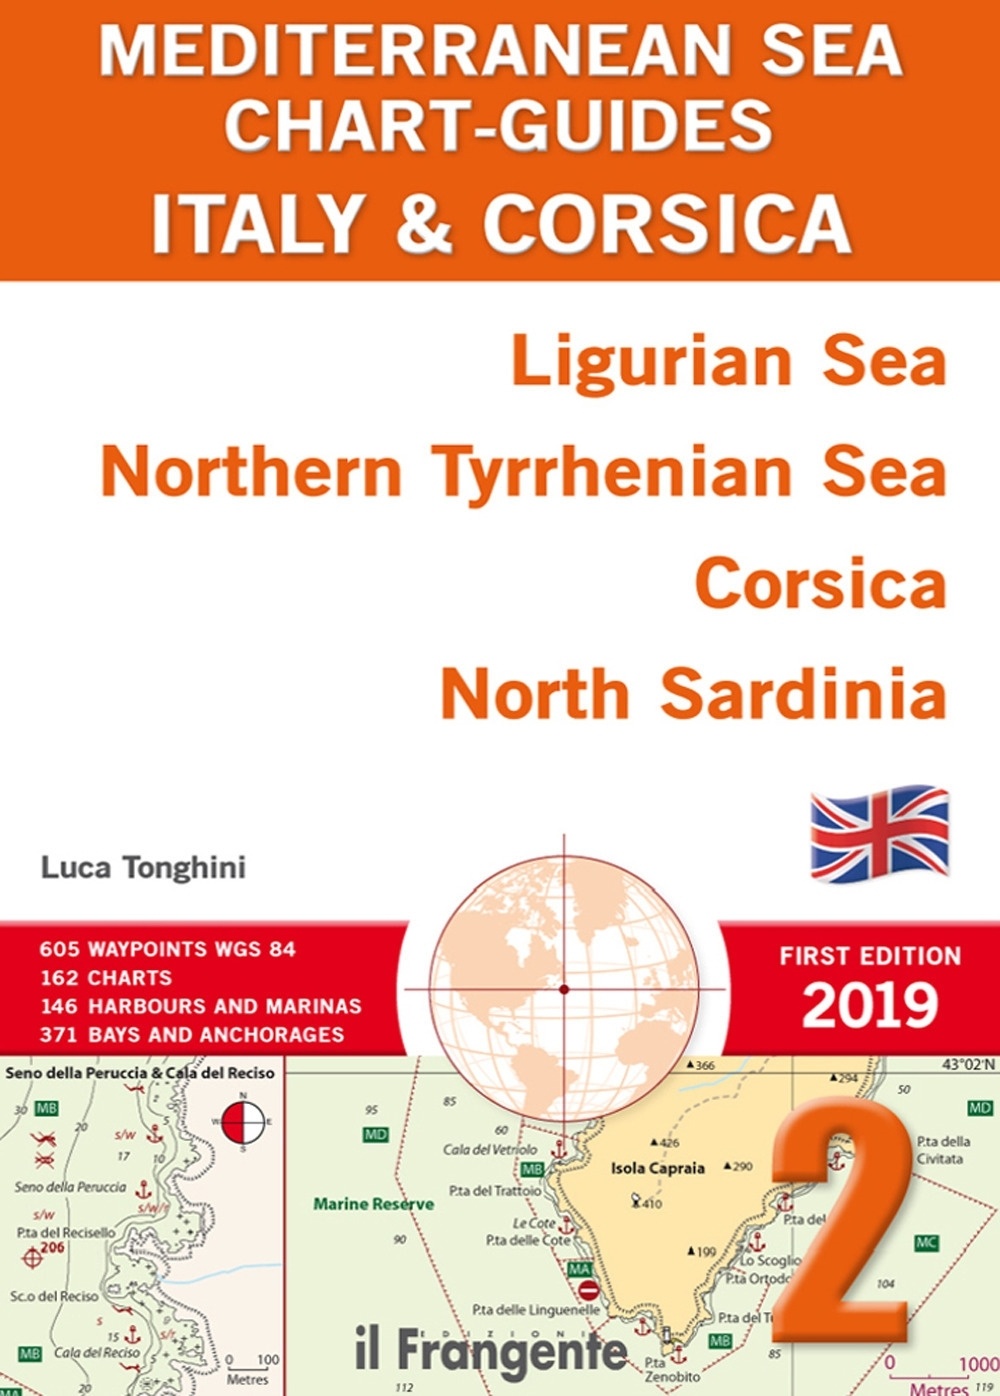 Mediterranean Sea Chart-Guides Italy & Corsica 2 "Ligurian Sea, Northern Tyrrhenian Sea, Corsica, North Sardinia"